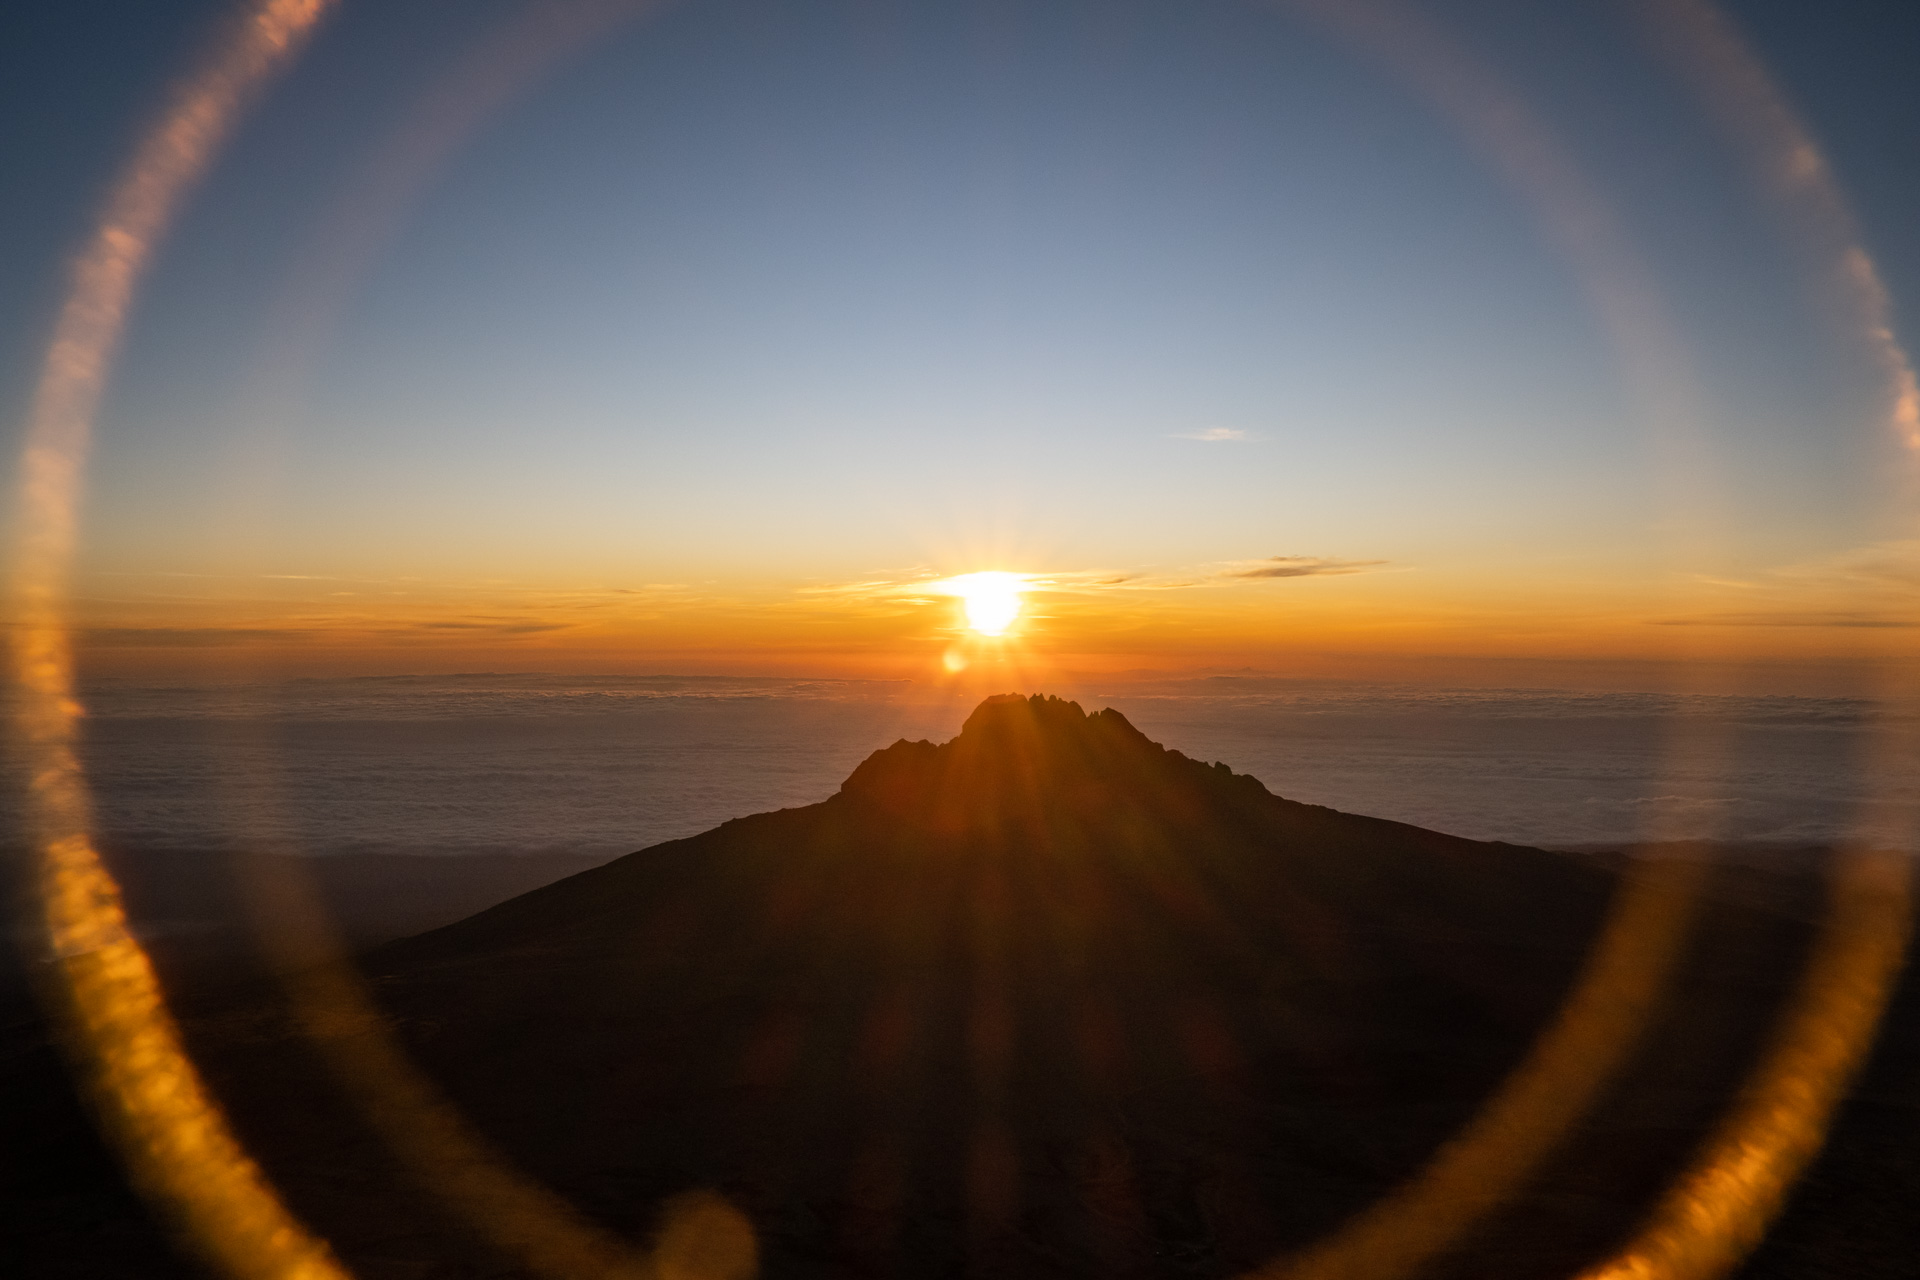 Above: The sun rises over Mawenzi peak